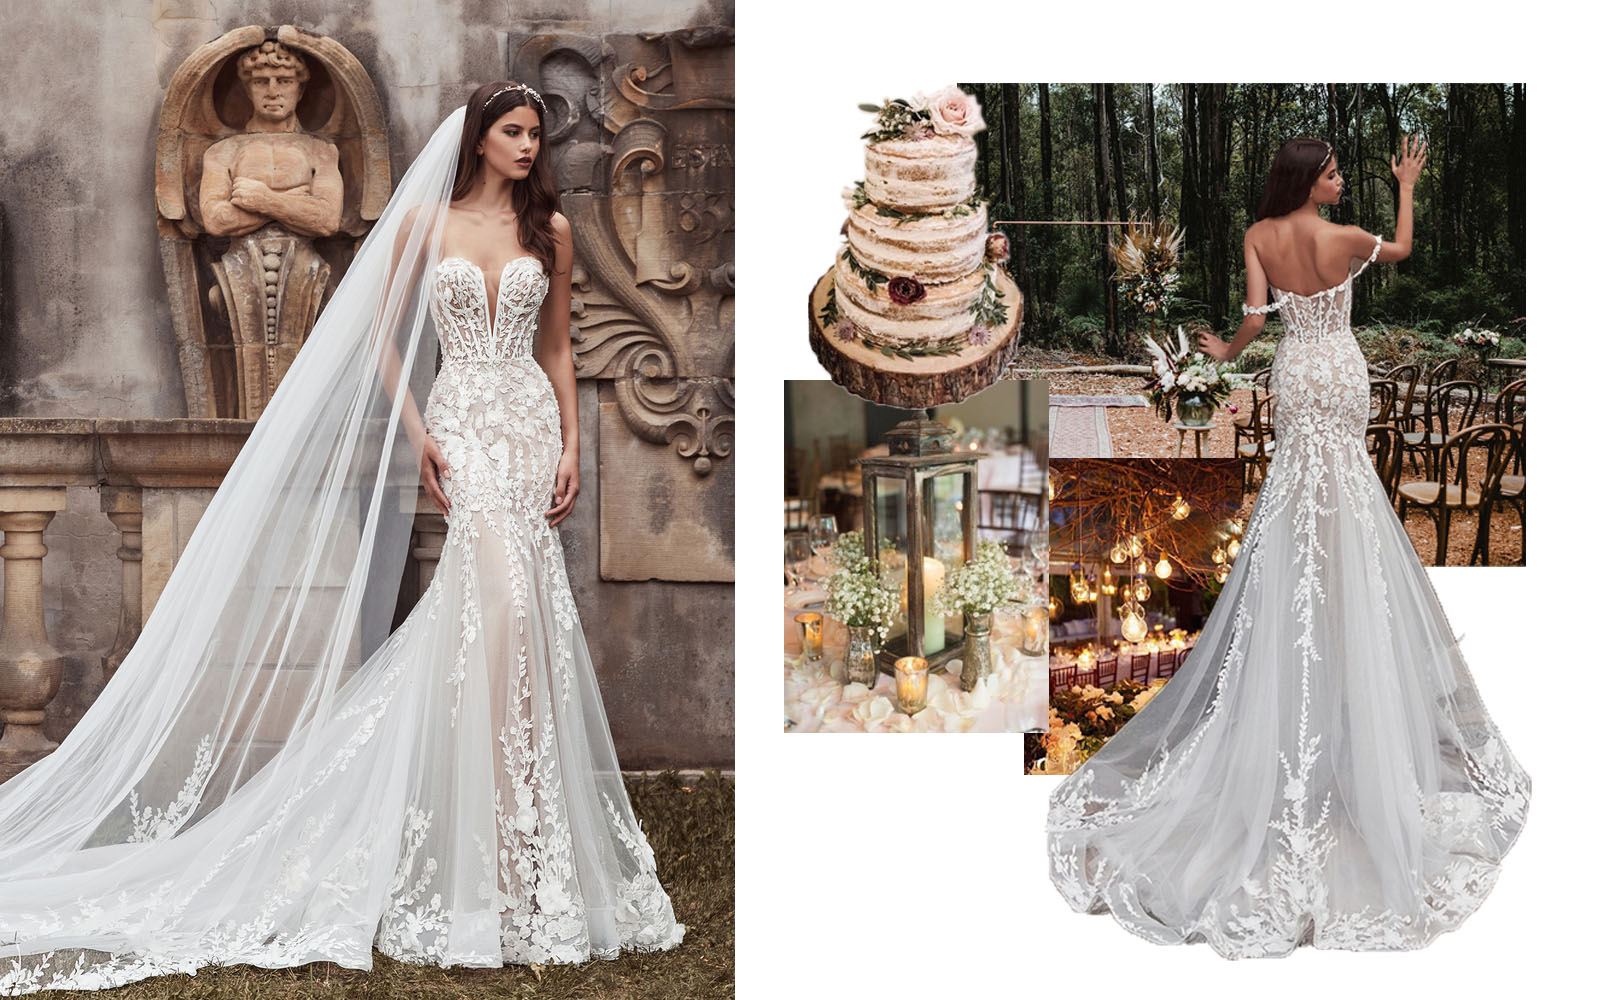 Rustic Wedding in Lilia Mermaid Wedding Dress by Calla Blanche 2021 at Fashionably Yours Bridal